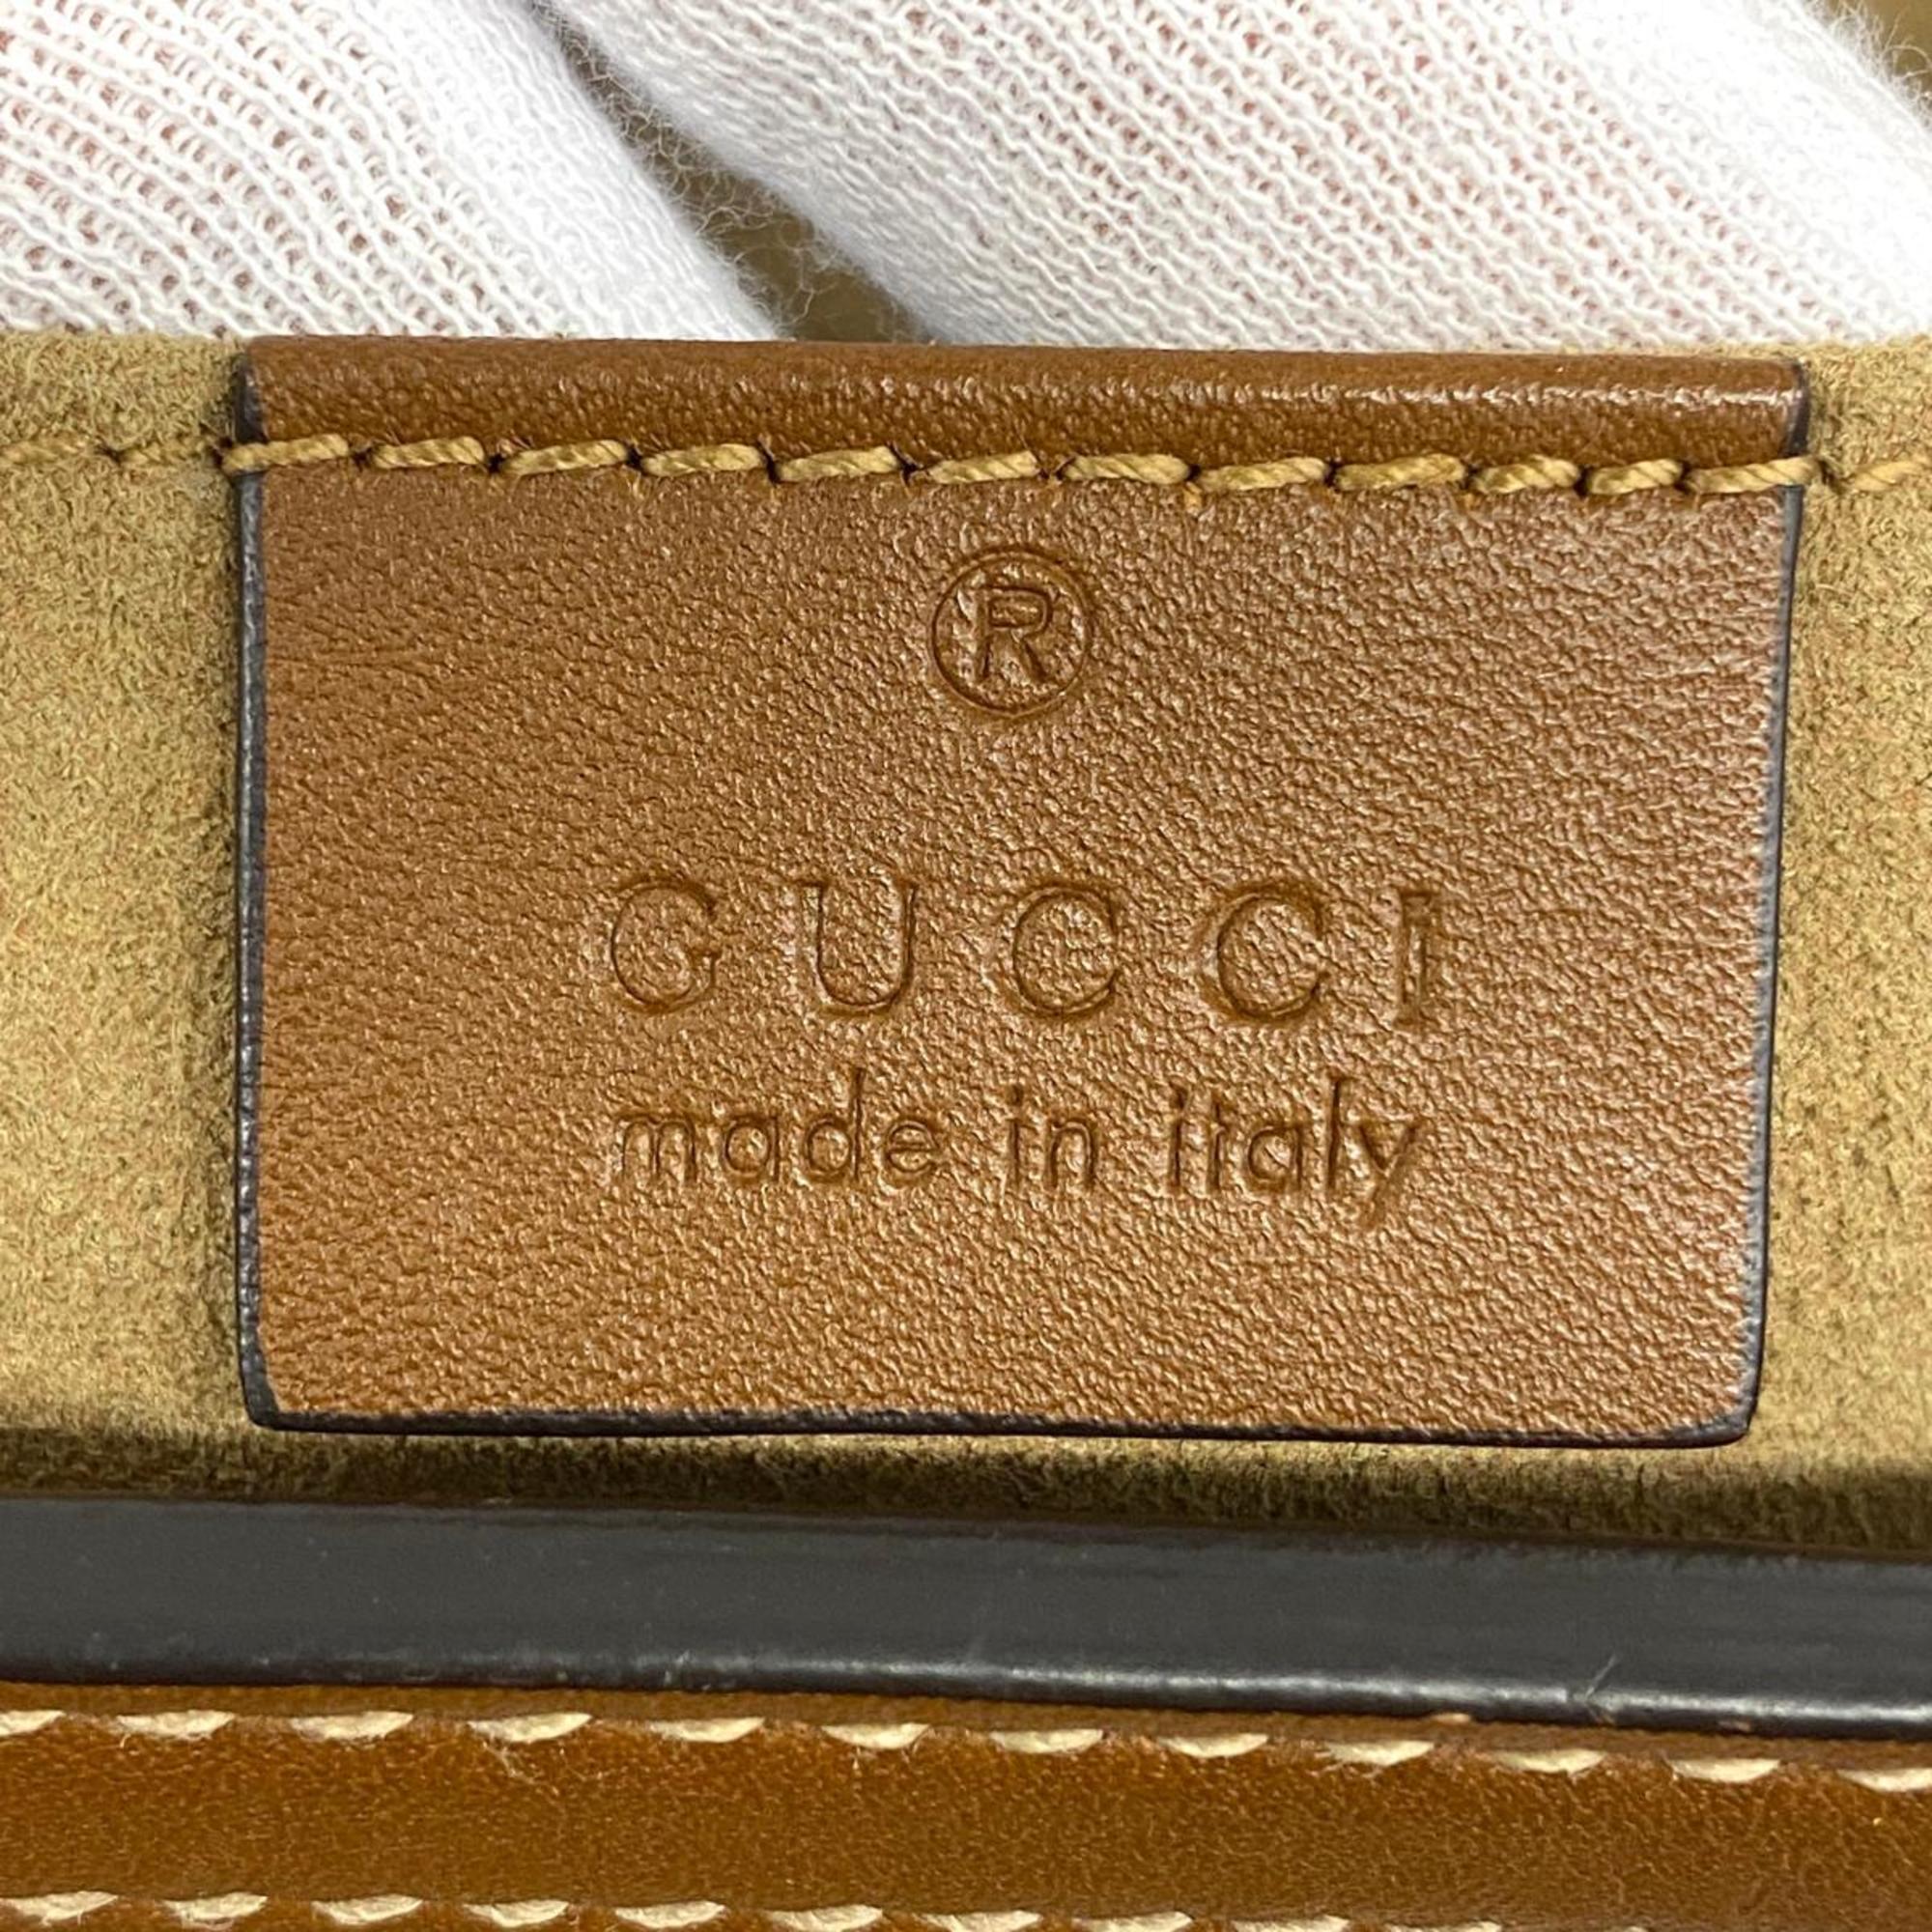 Gucci Shoulder Bag GG Supreme 498156 Leather Brown Women's